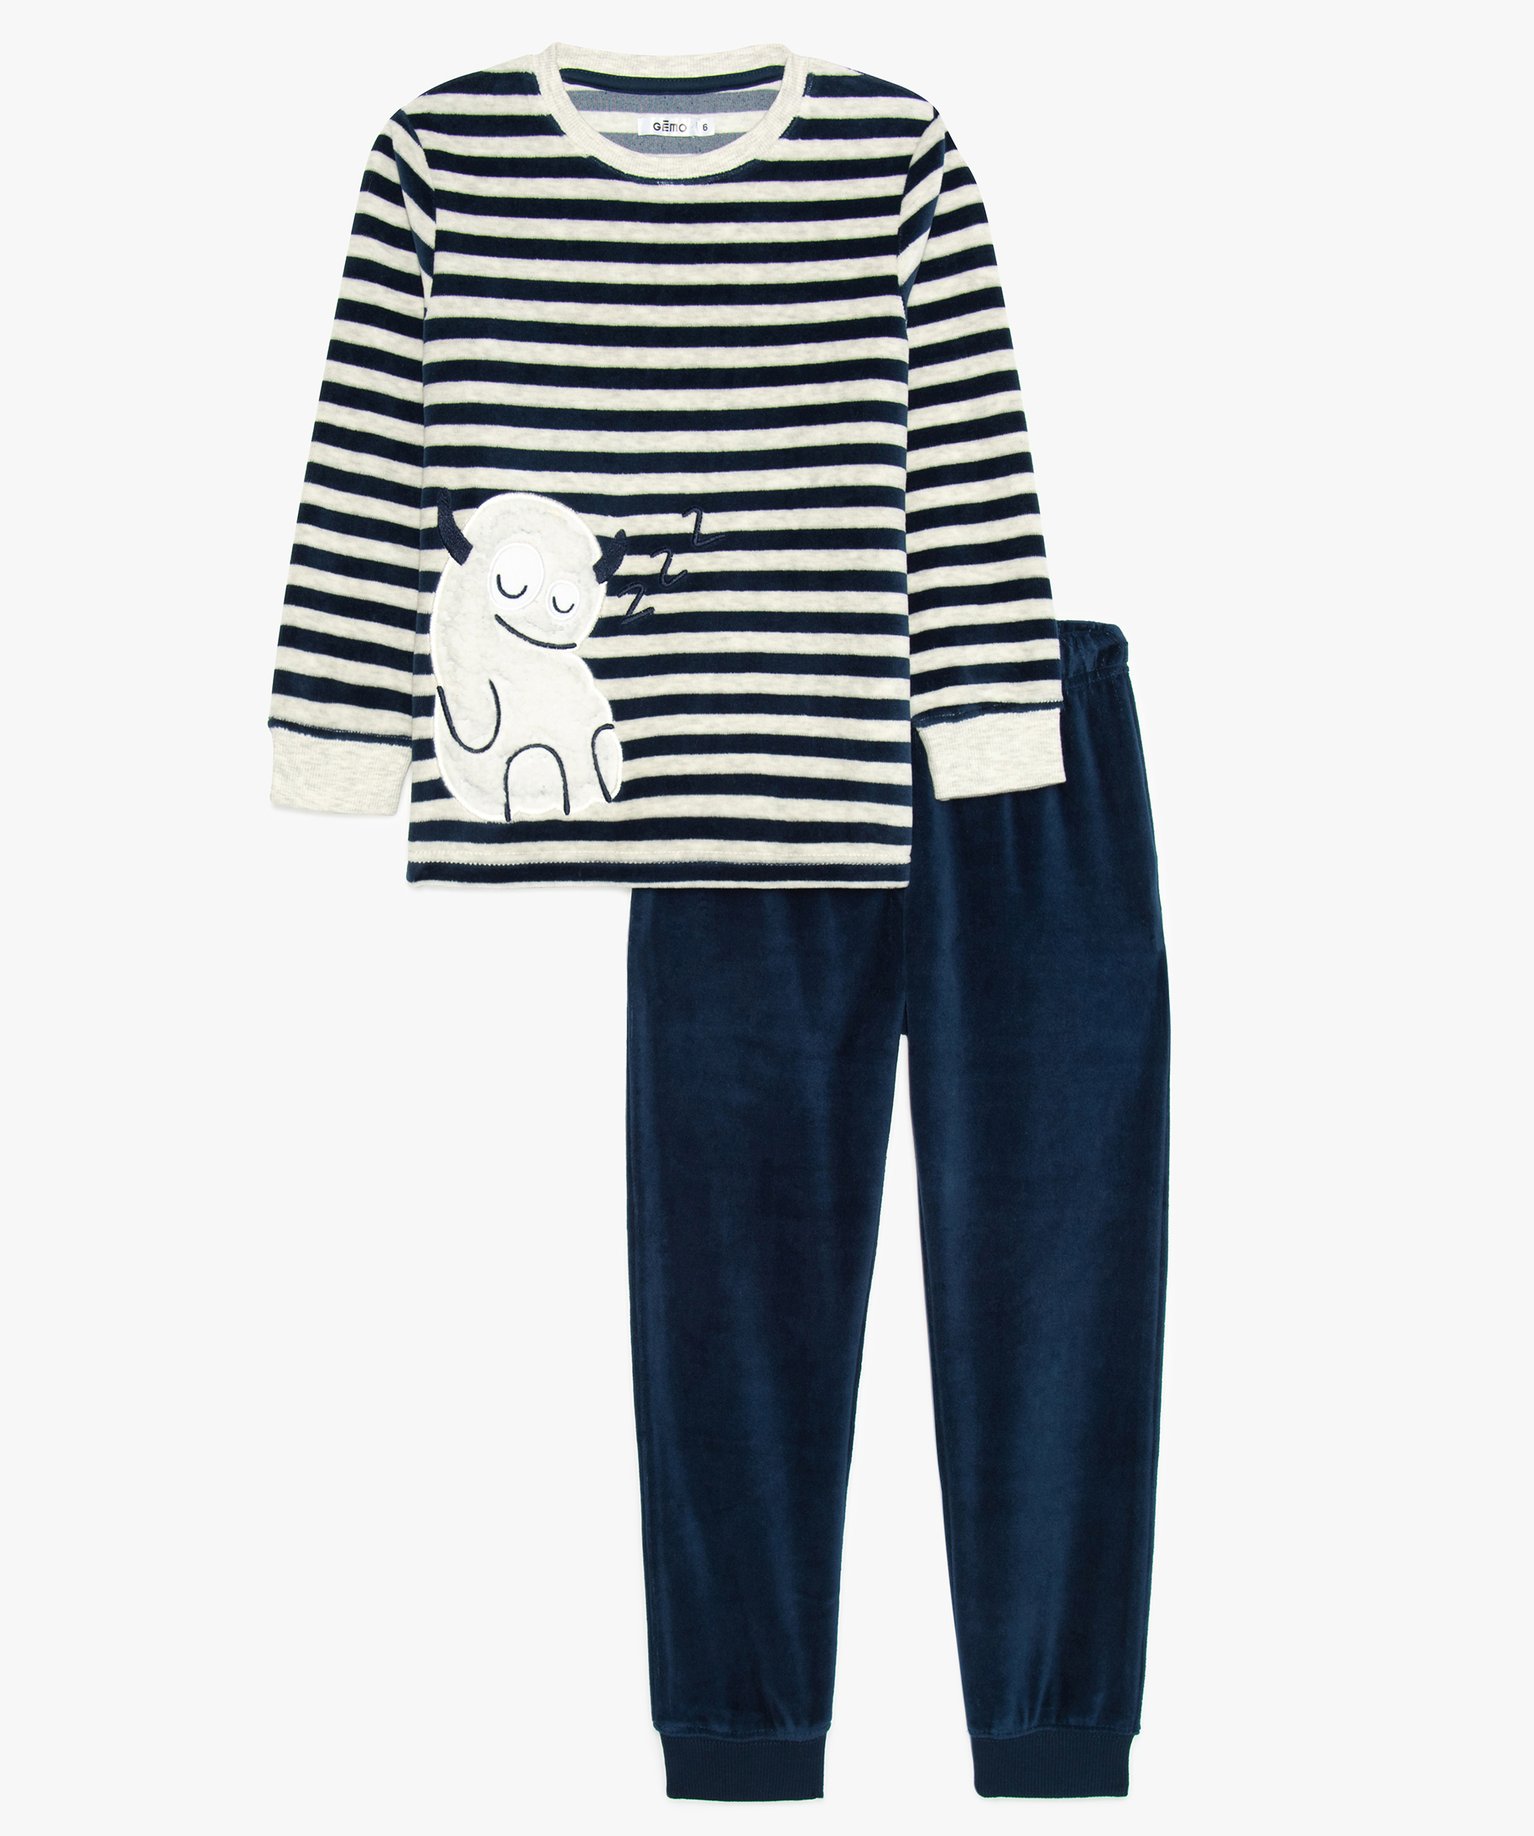 Combinaison pyjama garçon avec motif monstre Gemo Garçon Vêtements Sous-vêtements vêtements de nuit Pyjamas 